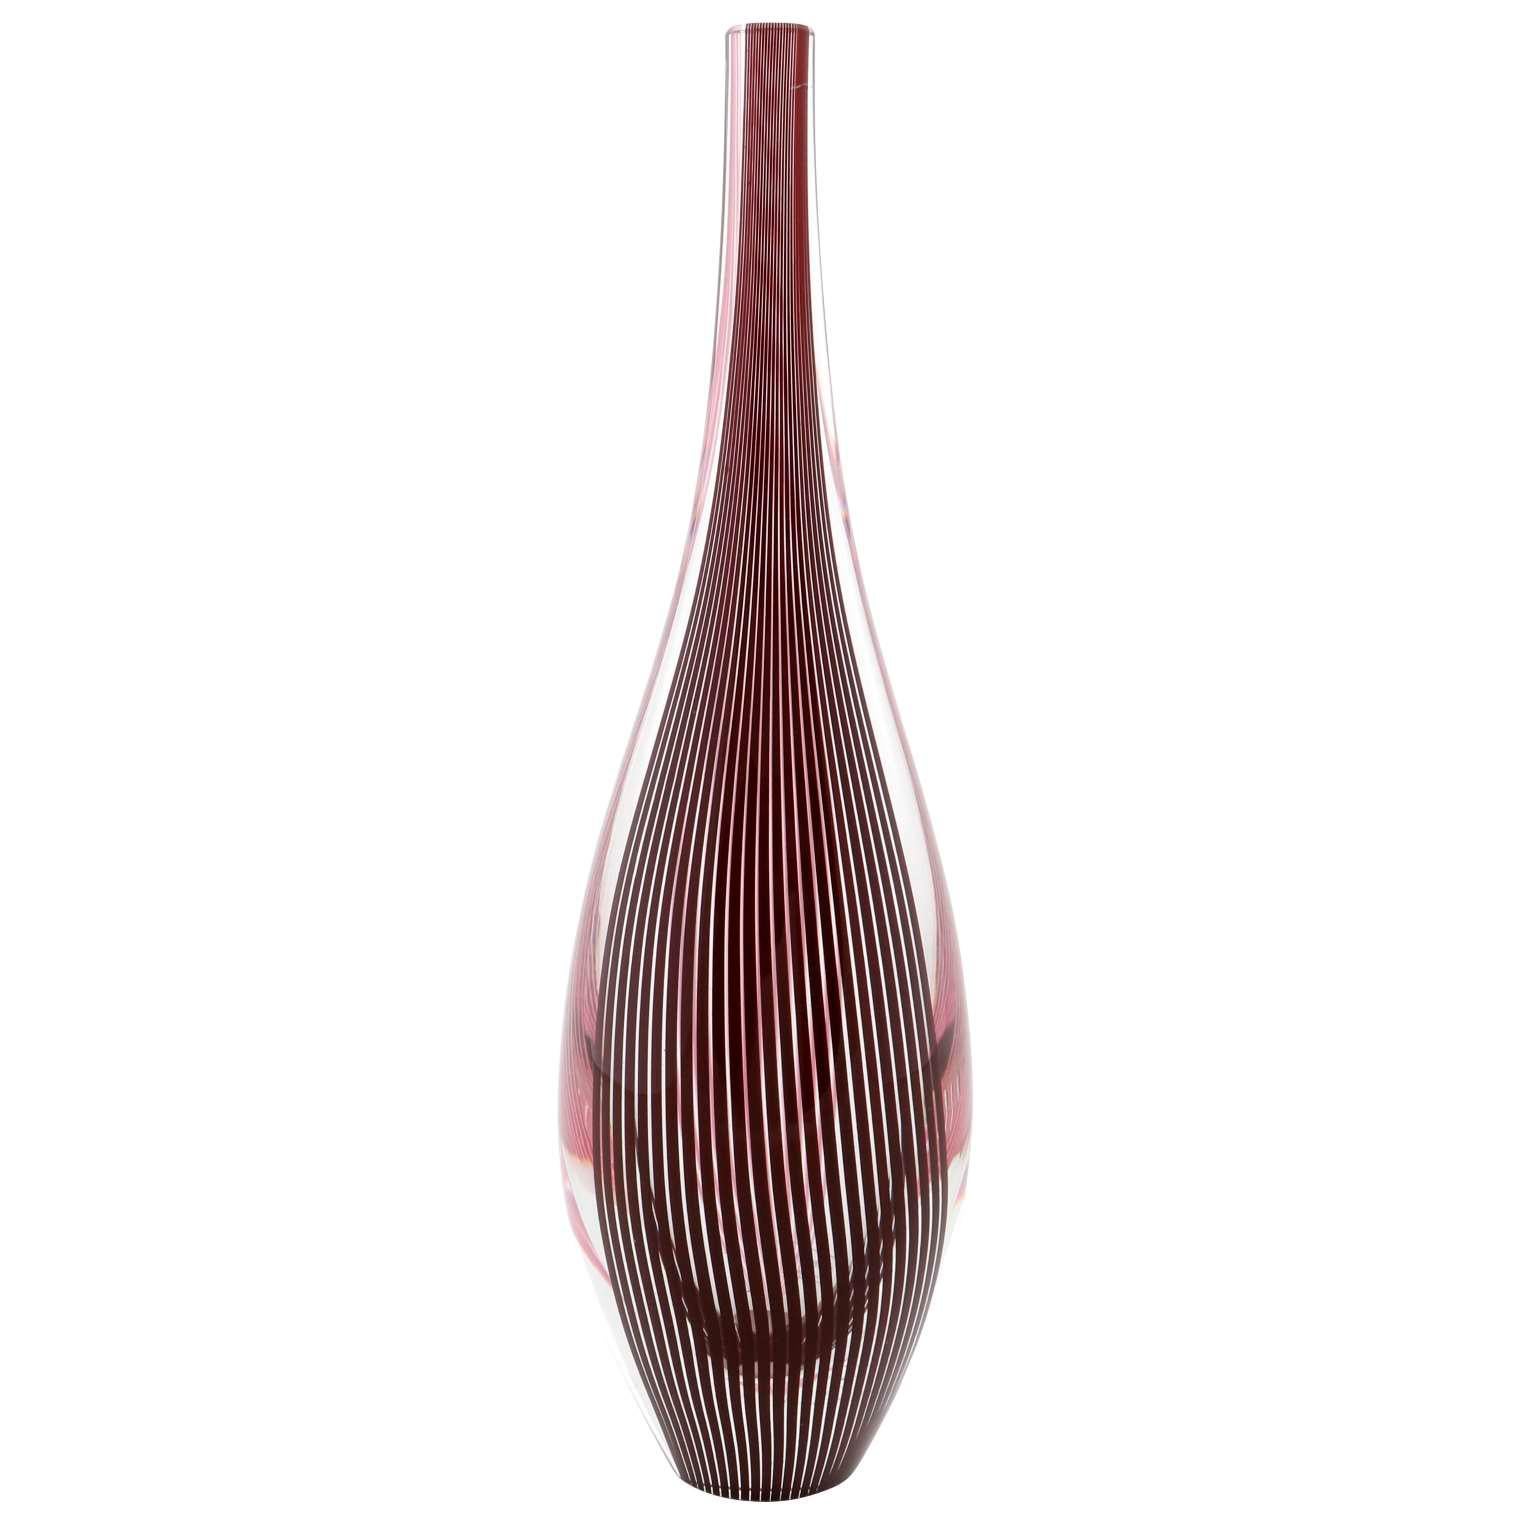 Italian Glass Vase Lino Tagliapietra for Effetre International, Purple Pink, Italy, 1986